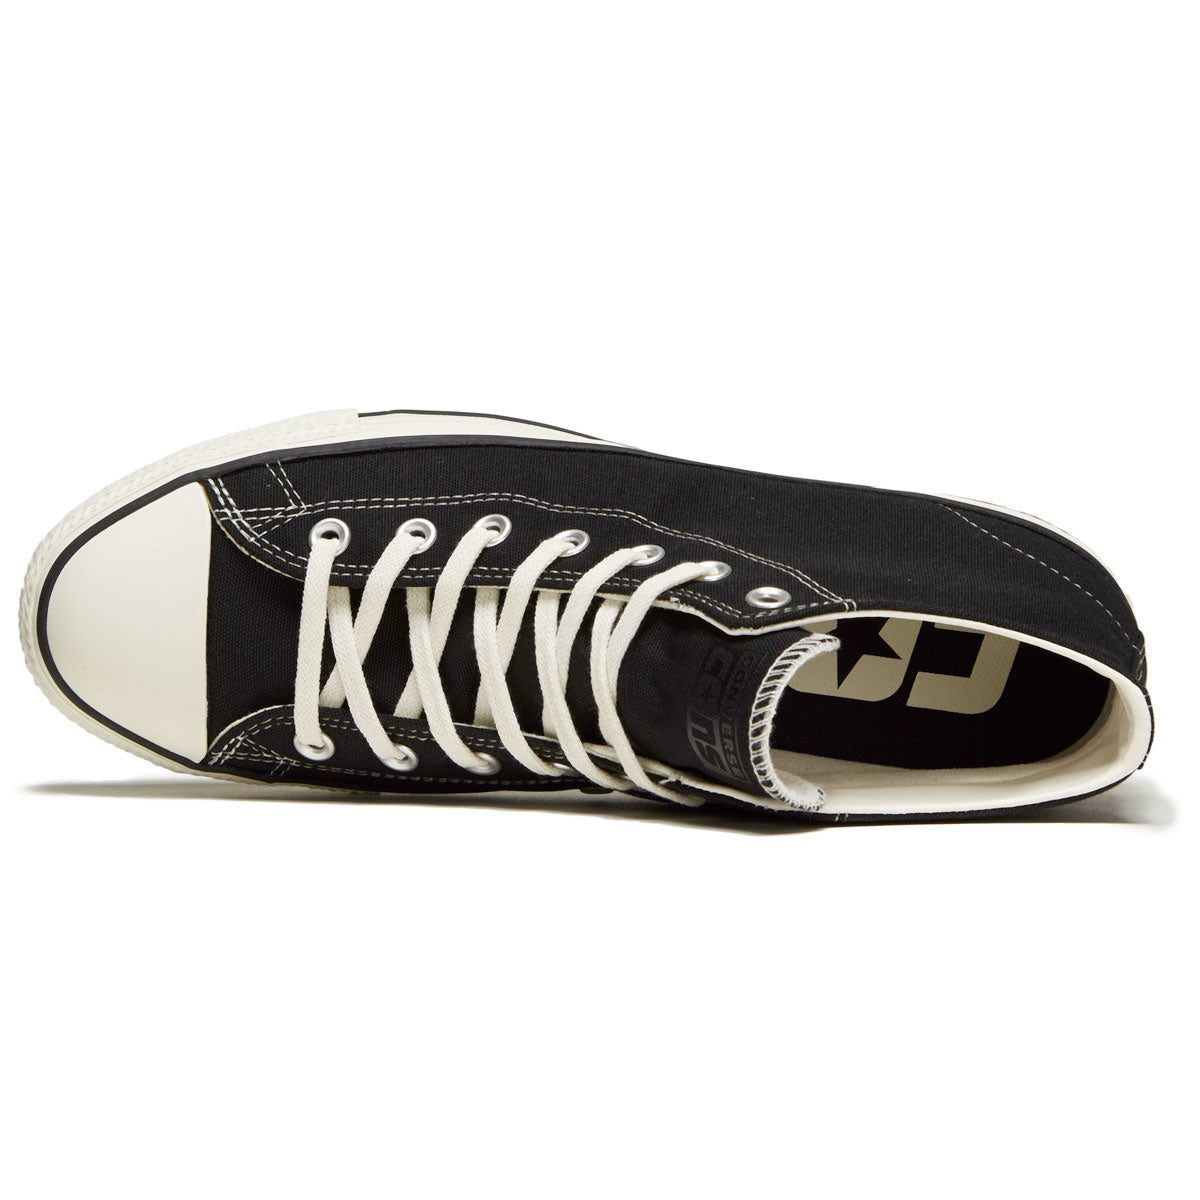 Converse Chuck Taylor All Star Pro Mid Shoes - Black/Black/Egret image 3